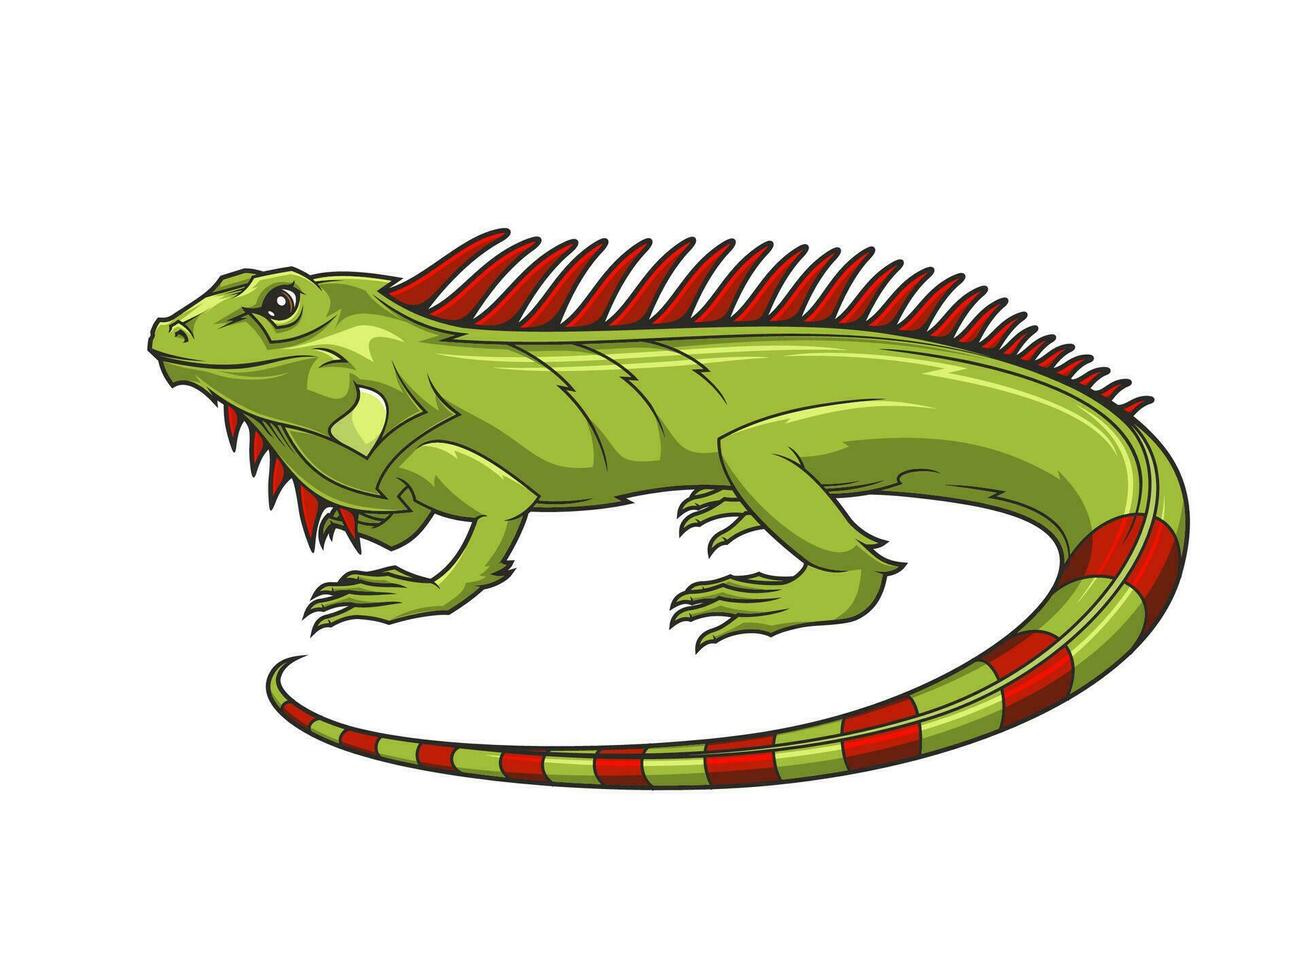 Cartoon iguana mascot, lizard animal green reptile vector